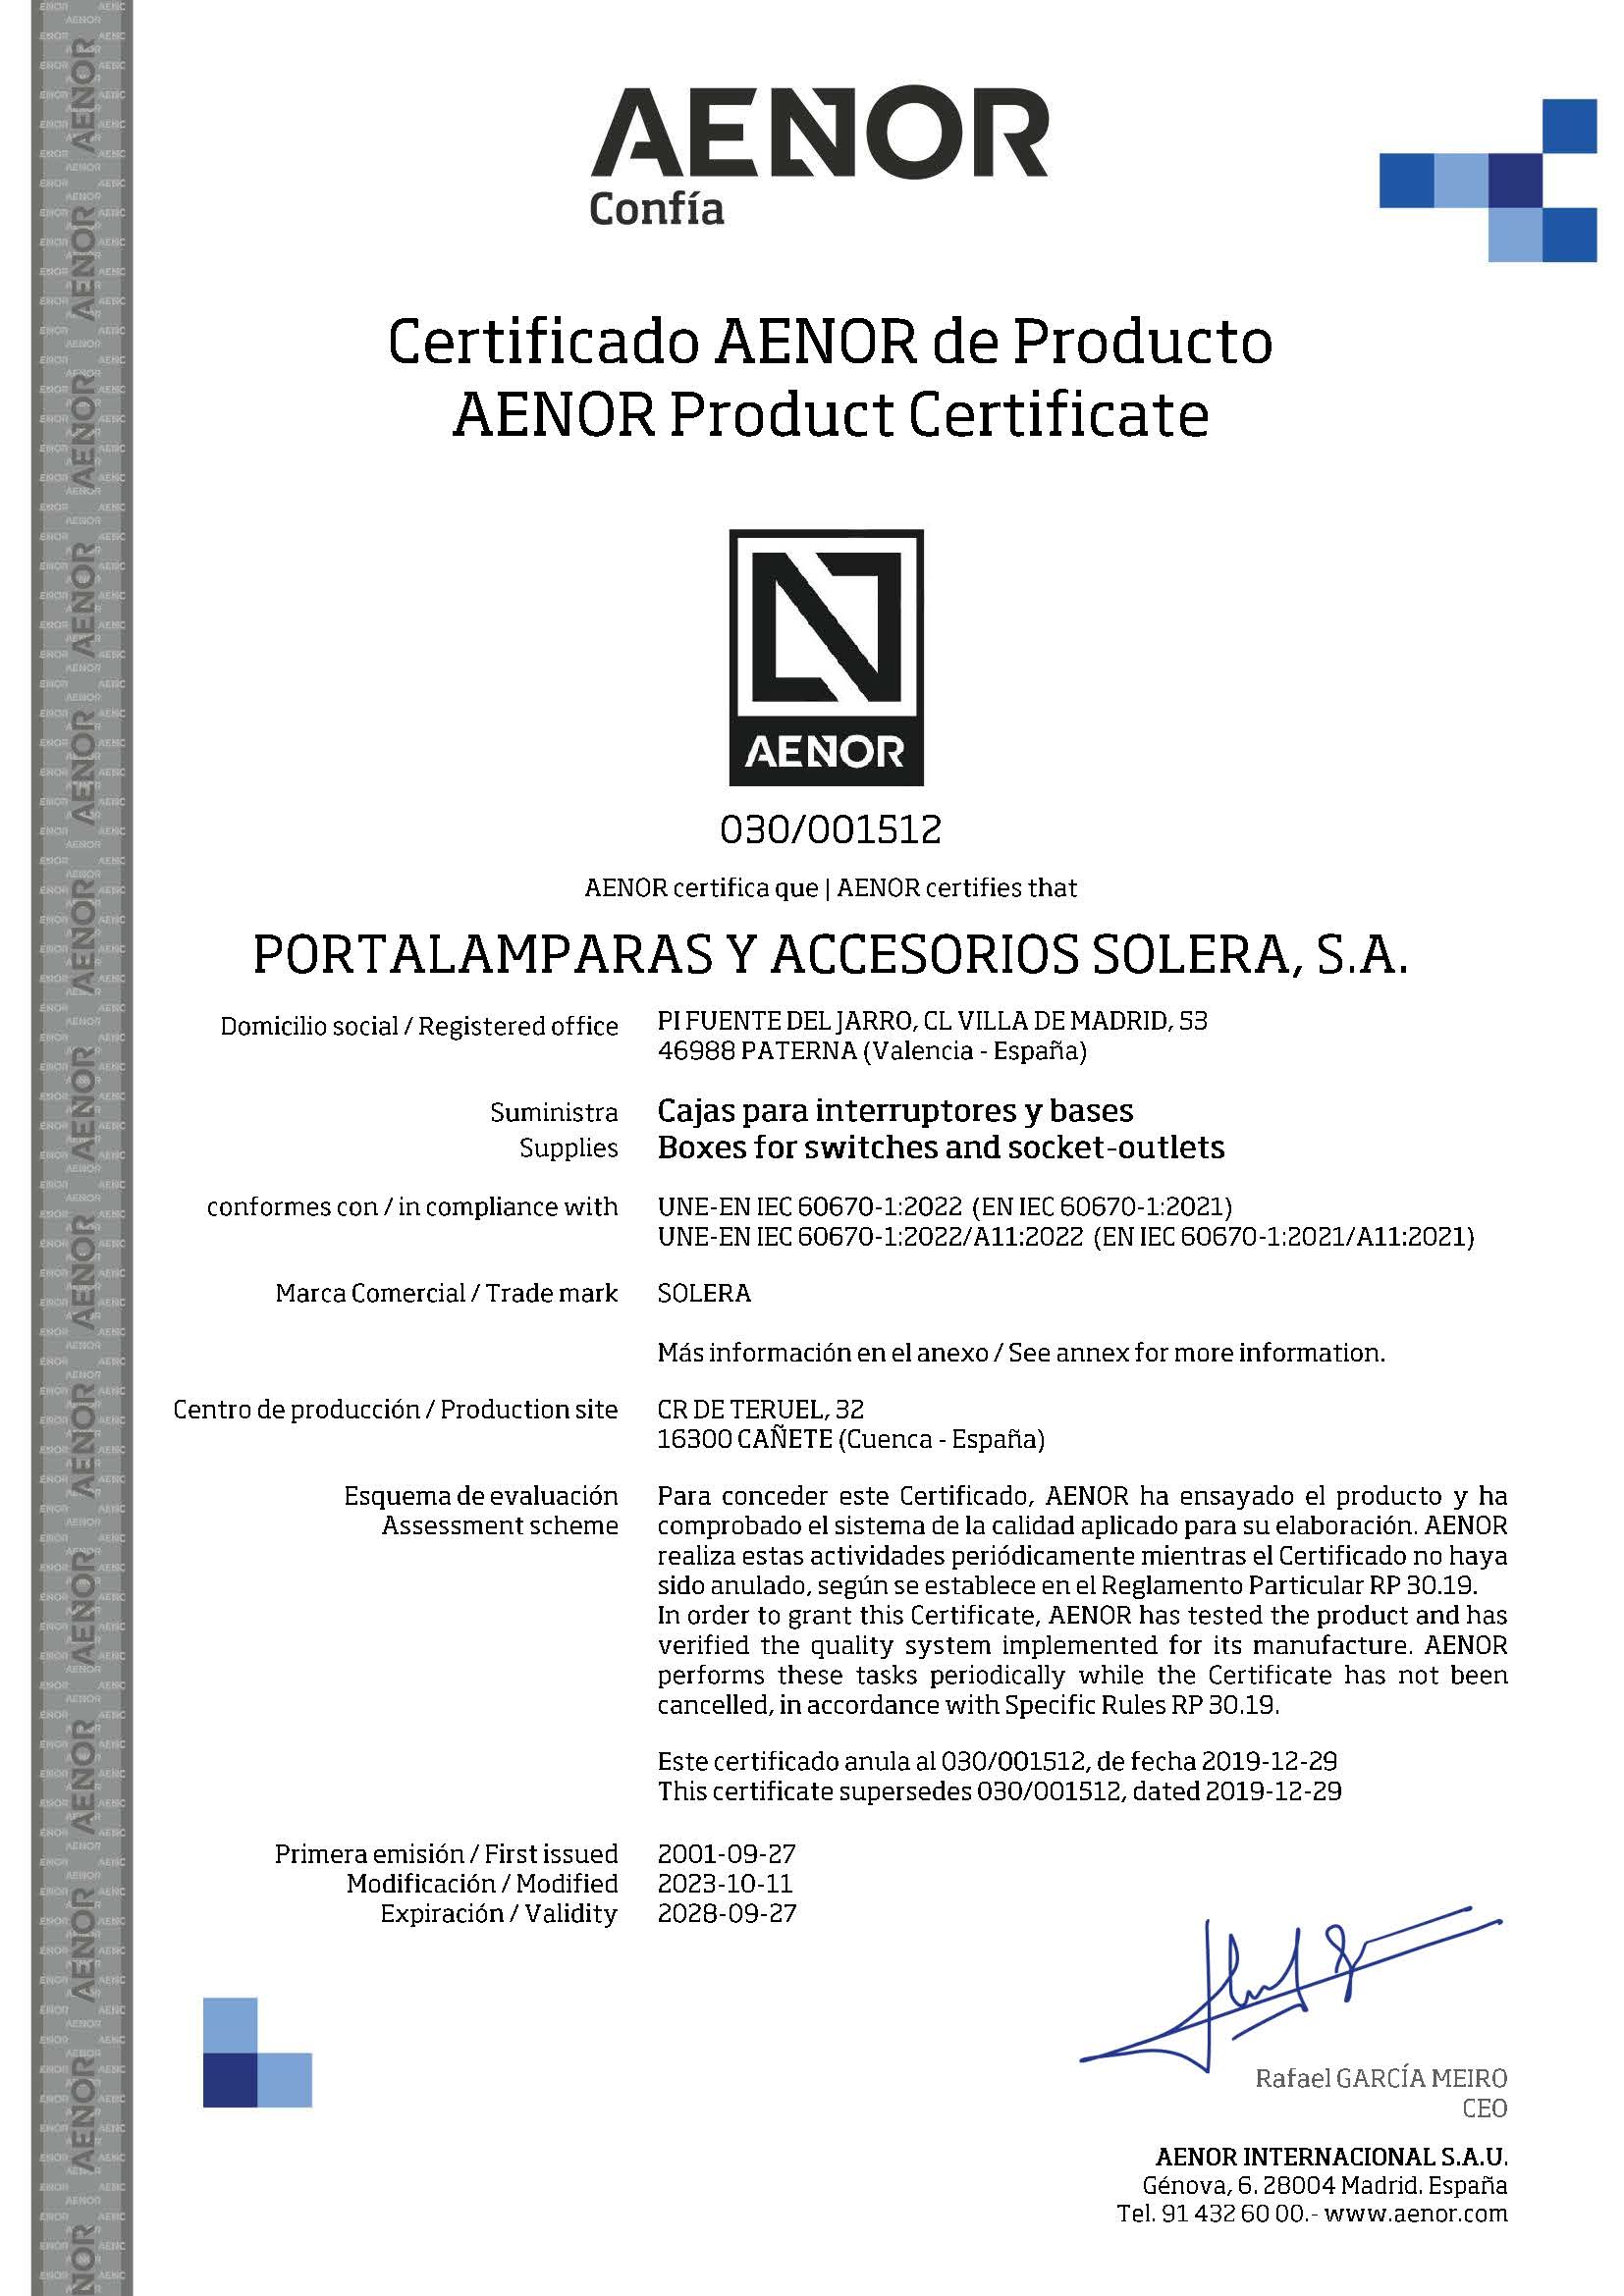 AENOR 625 product certificate